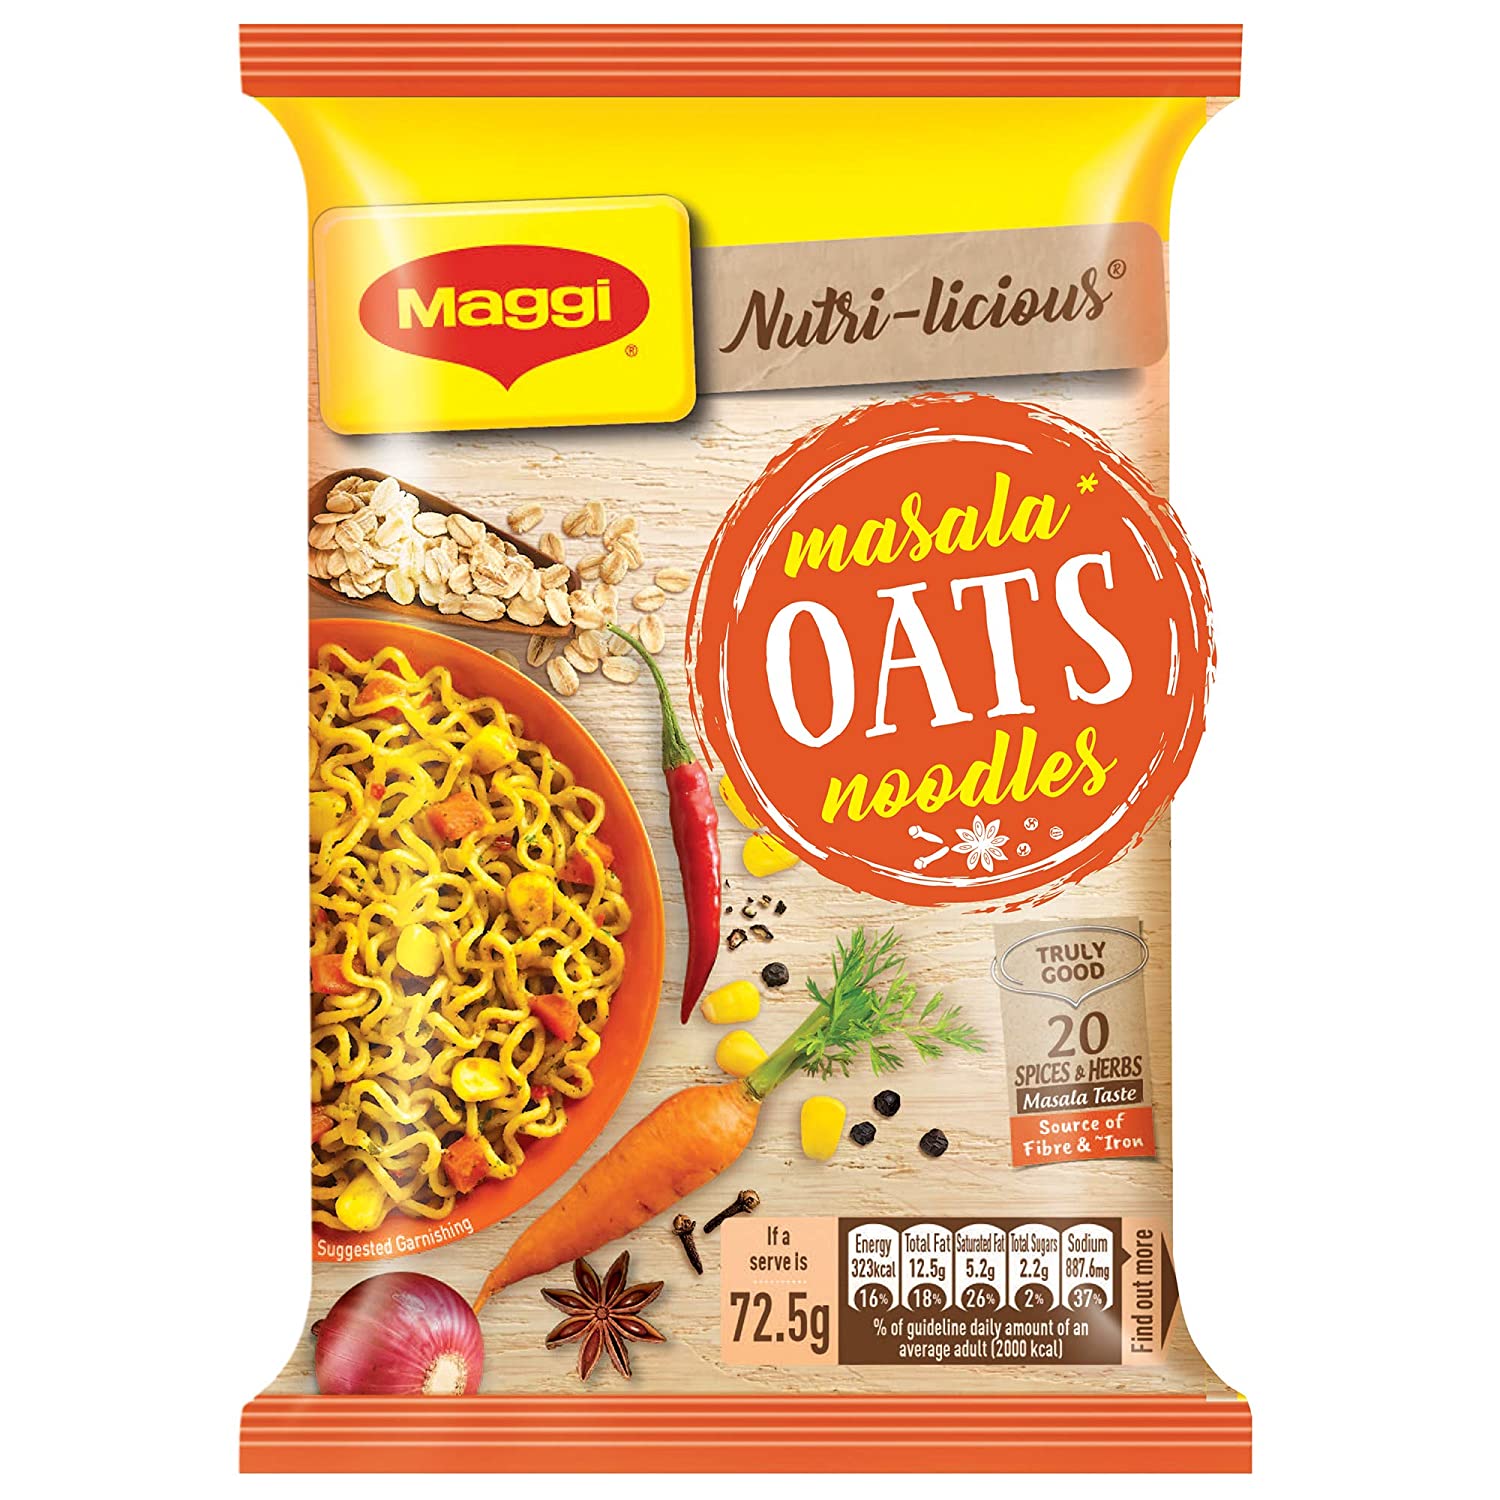 MAGGI NUTRI-Licious Masala Oats Noodles – 72.5g Pouch